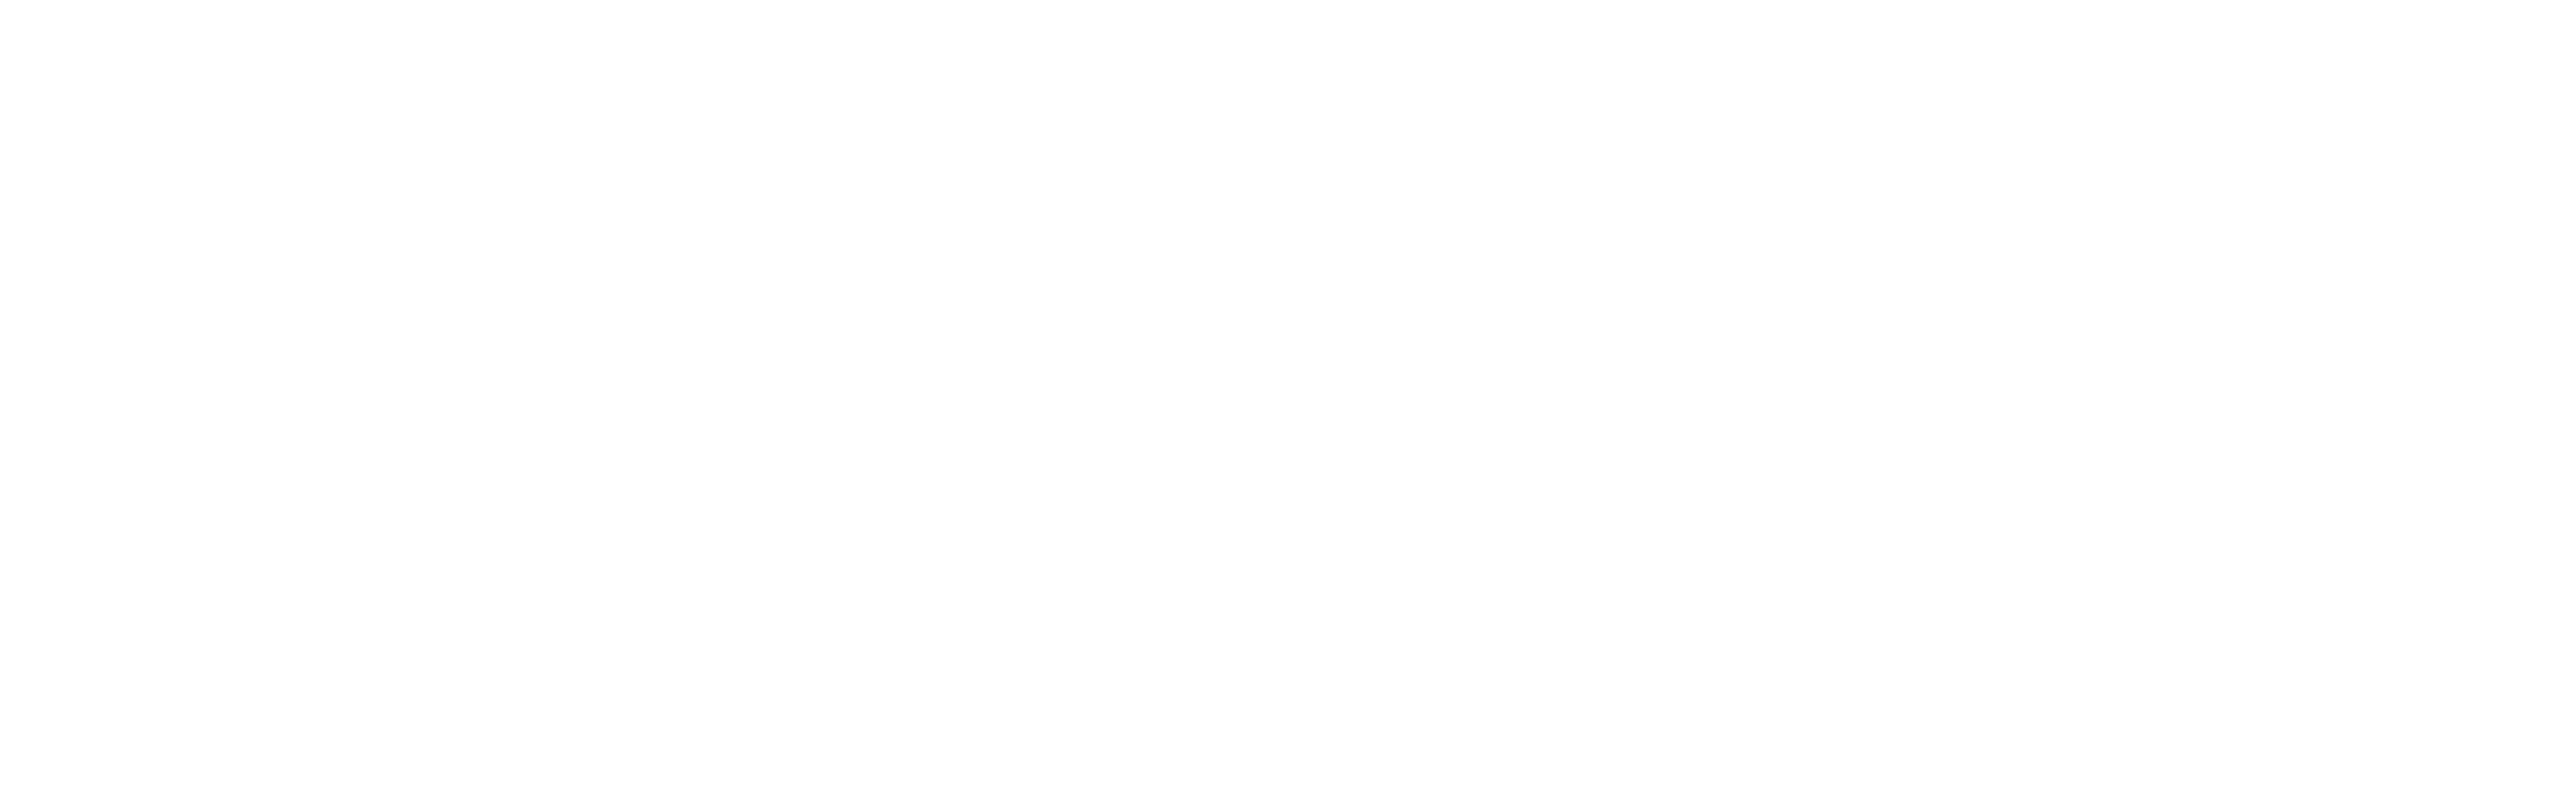 Automated List Profits - Profitable List Building Made Easy